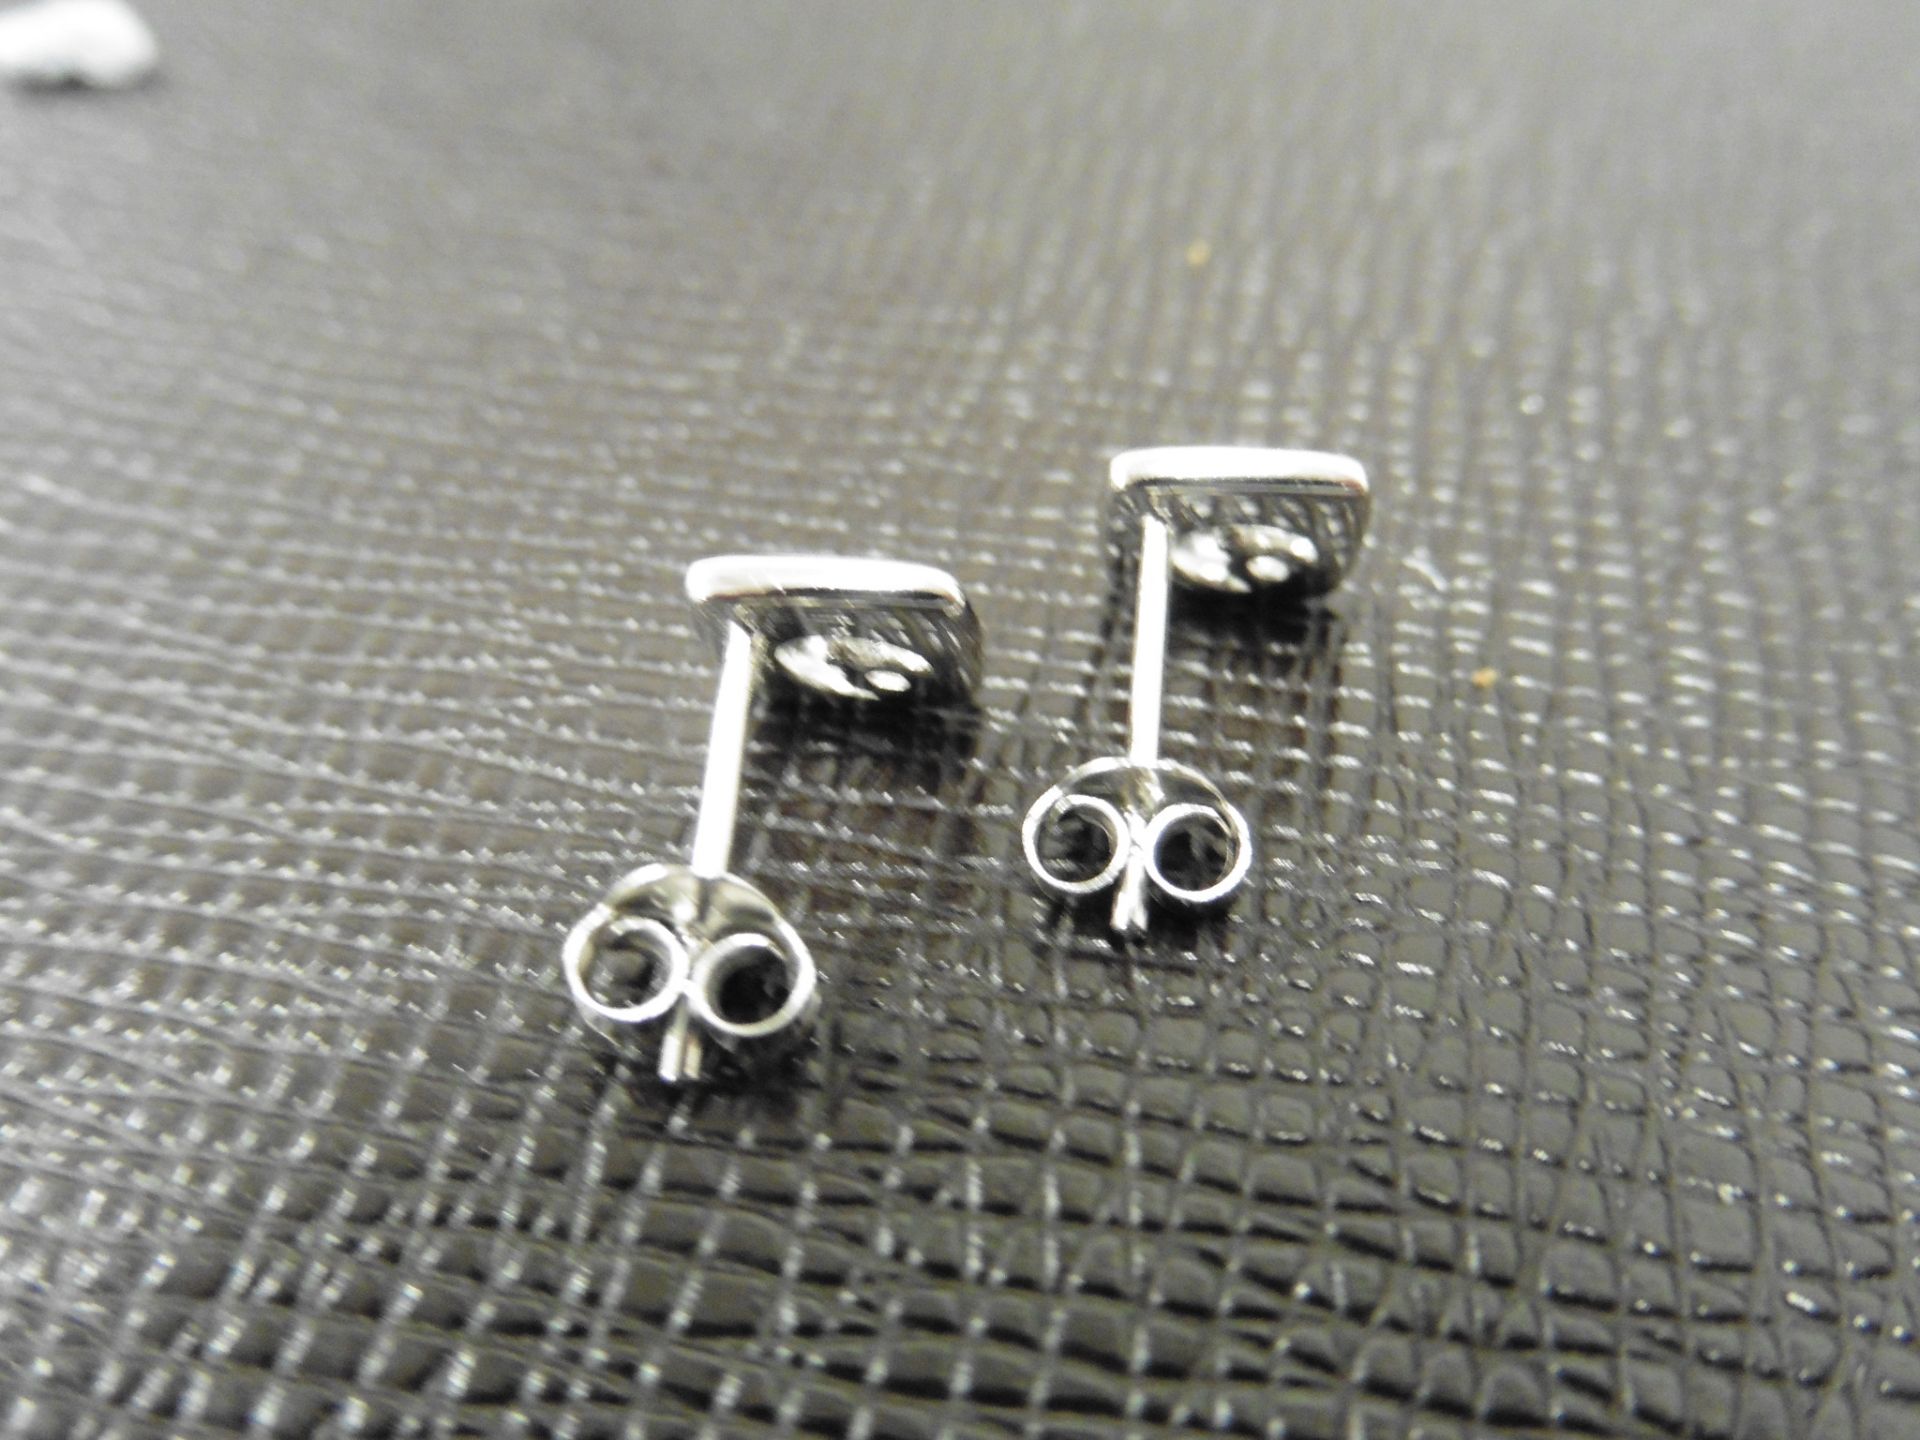 0.10ct diamond earrings set in platinum 950. 2 small brilliant cut diamonds, H colourand si2 - Image 3 of 3